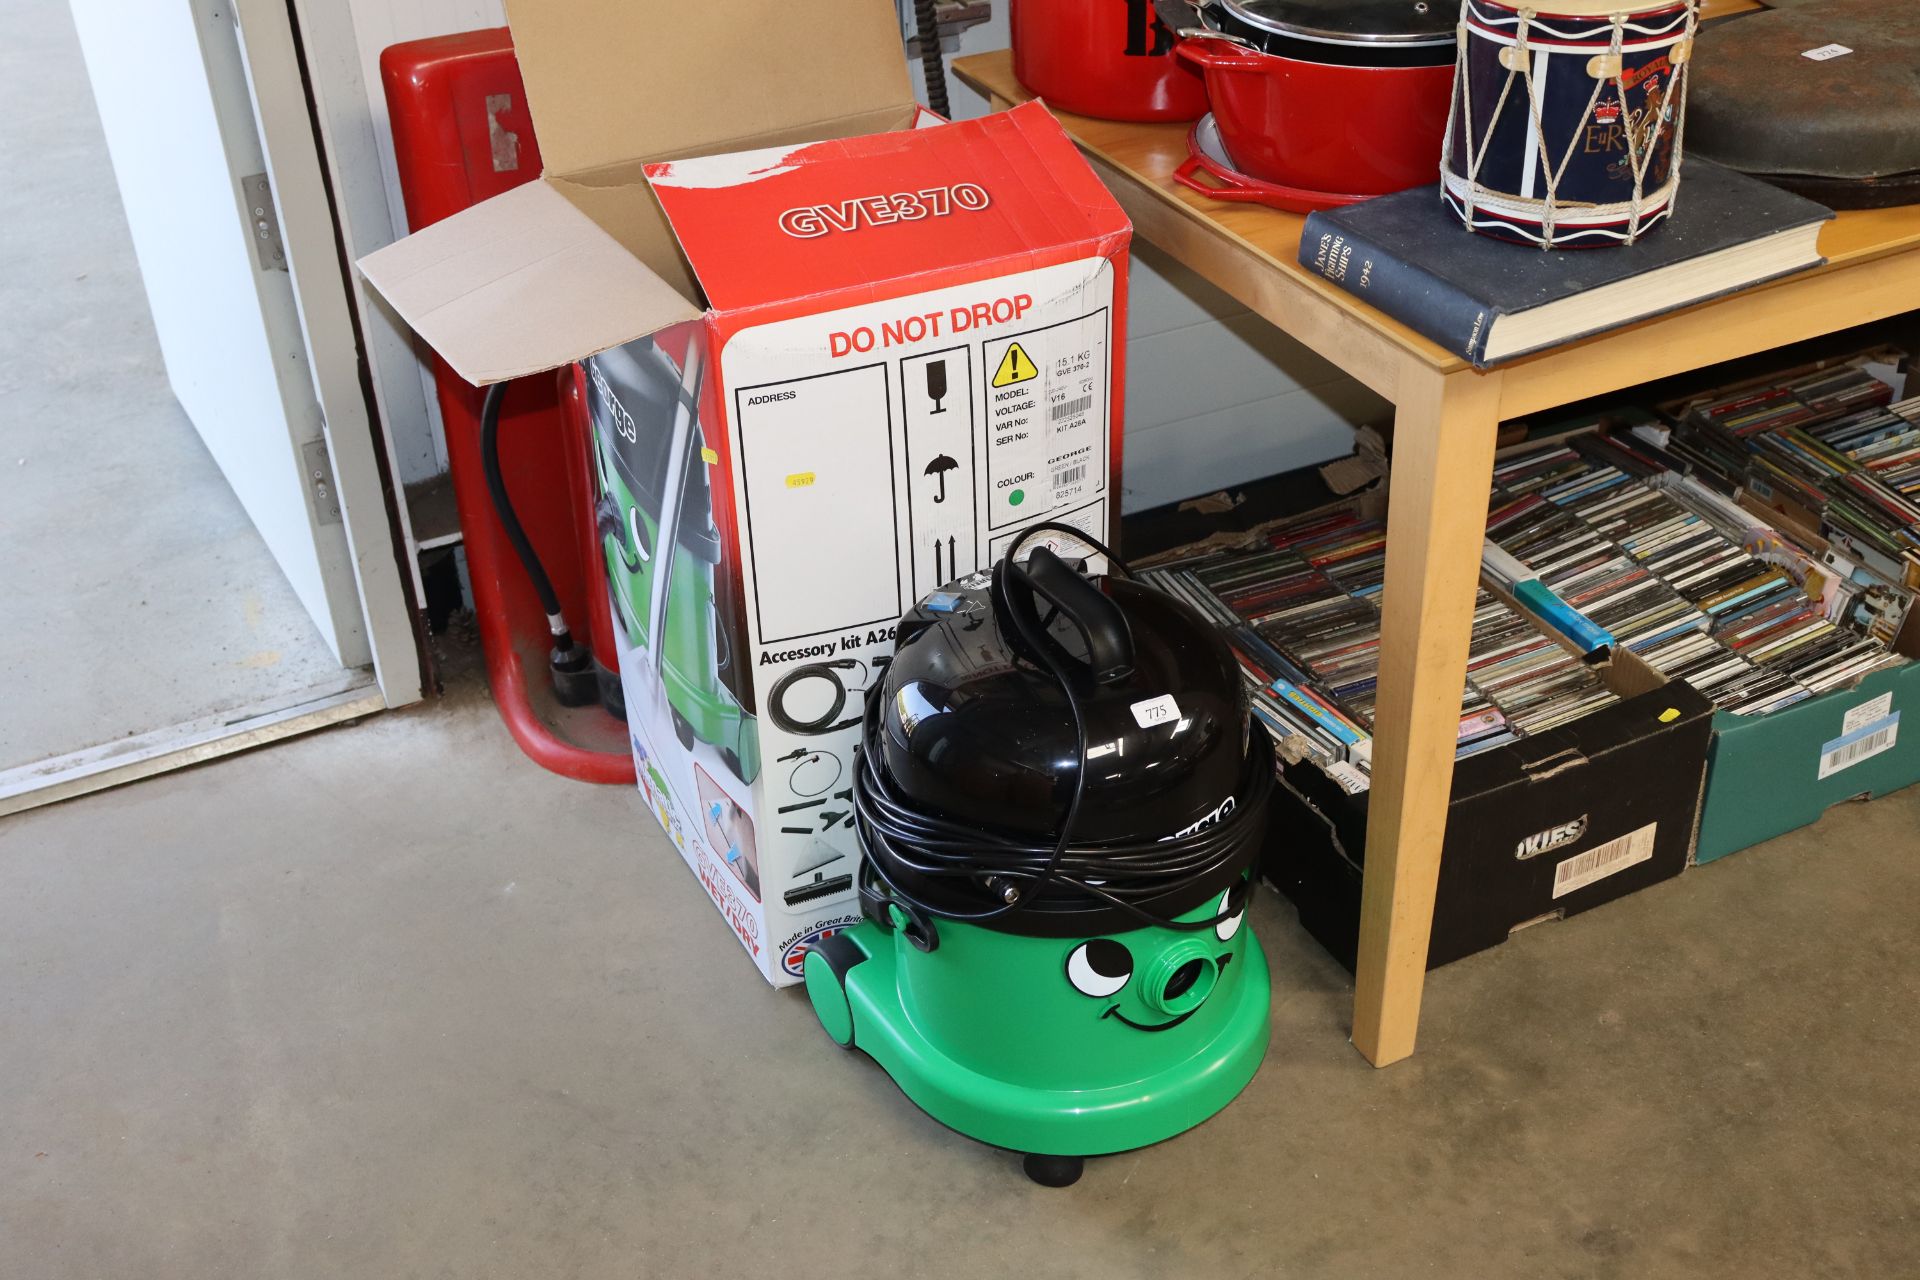 A George pneumatic vacuum cleaner with original bo